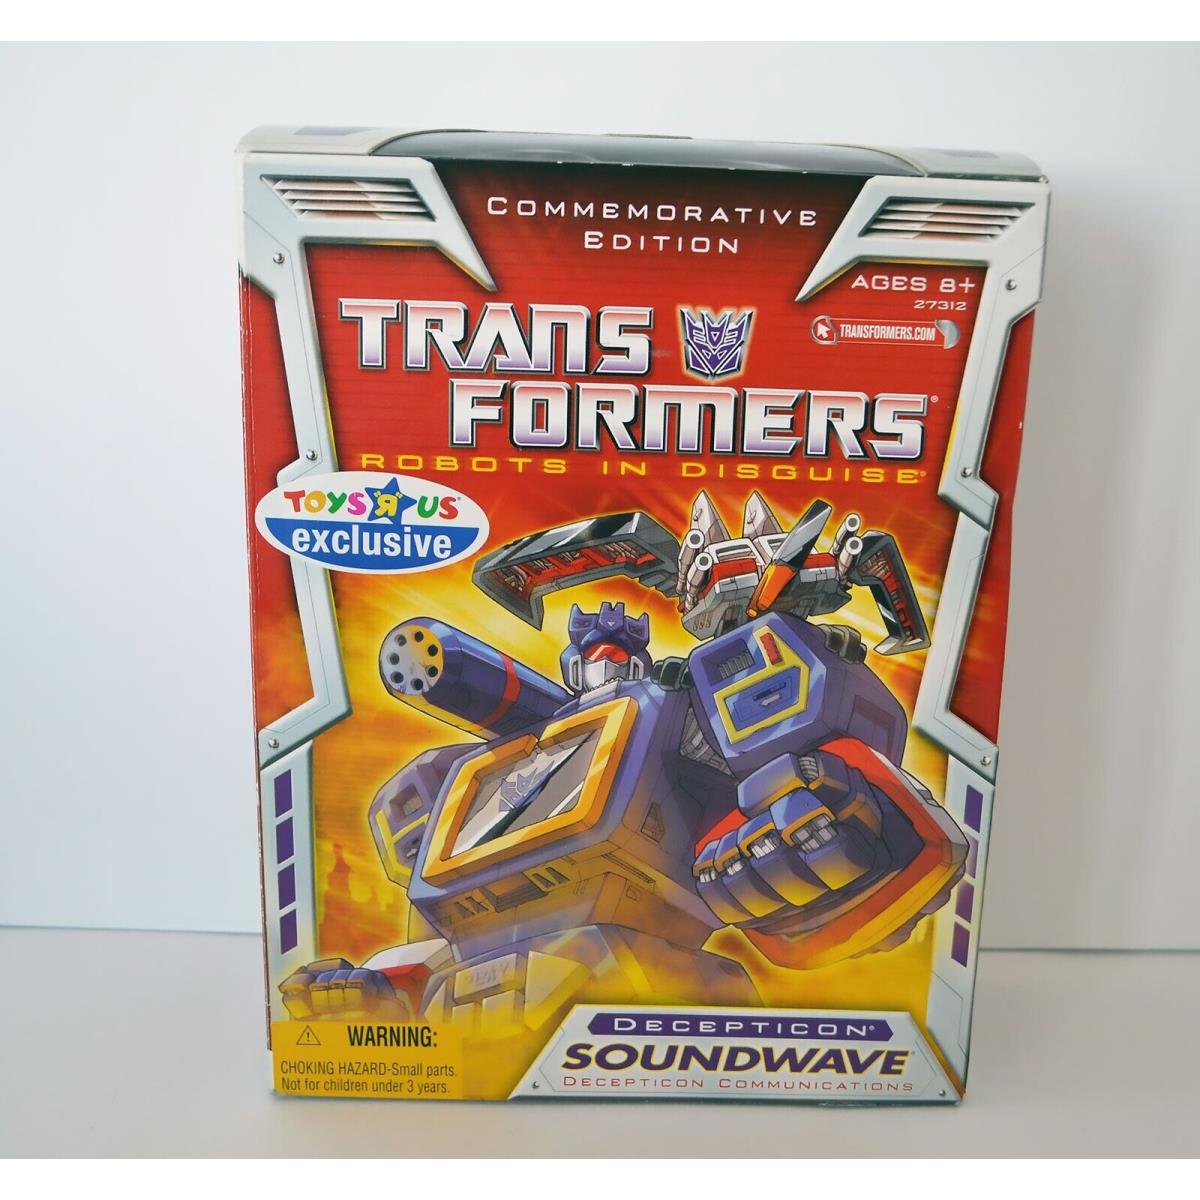 Hasbro 2006 G1 Transformers Commemorative Edition Soundwave Toys R Us Exclusive